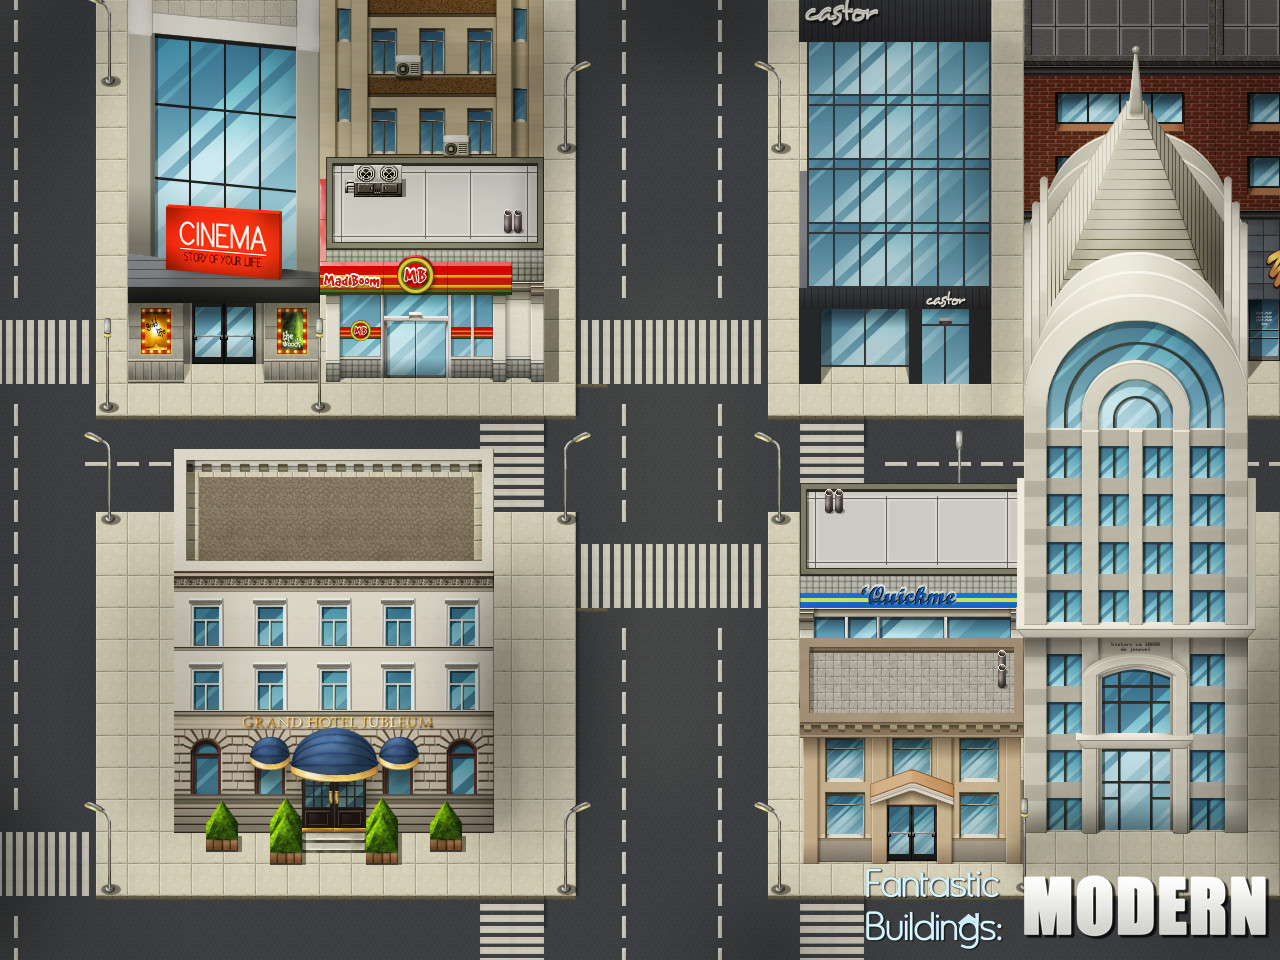 RPG Maker VX - Ace Fantastic Buildings: Modern DLC EU Steam CD Key (5.07$)